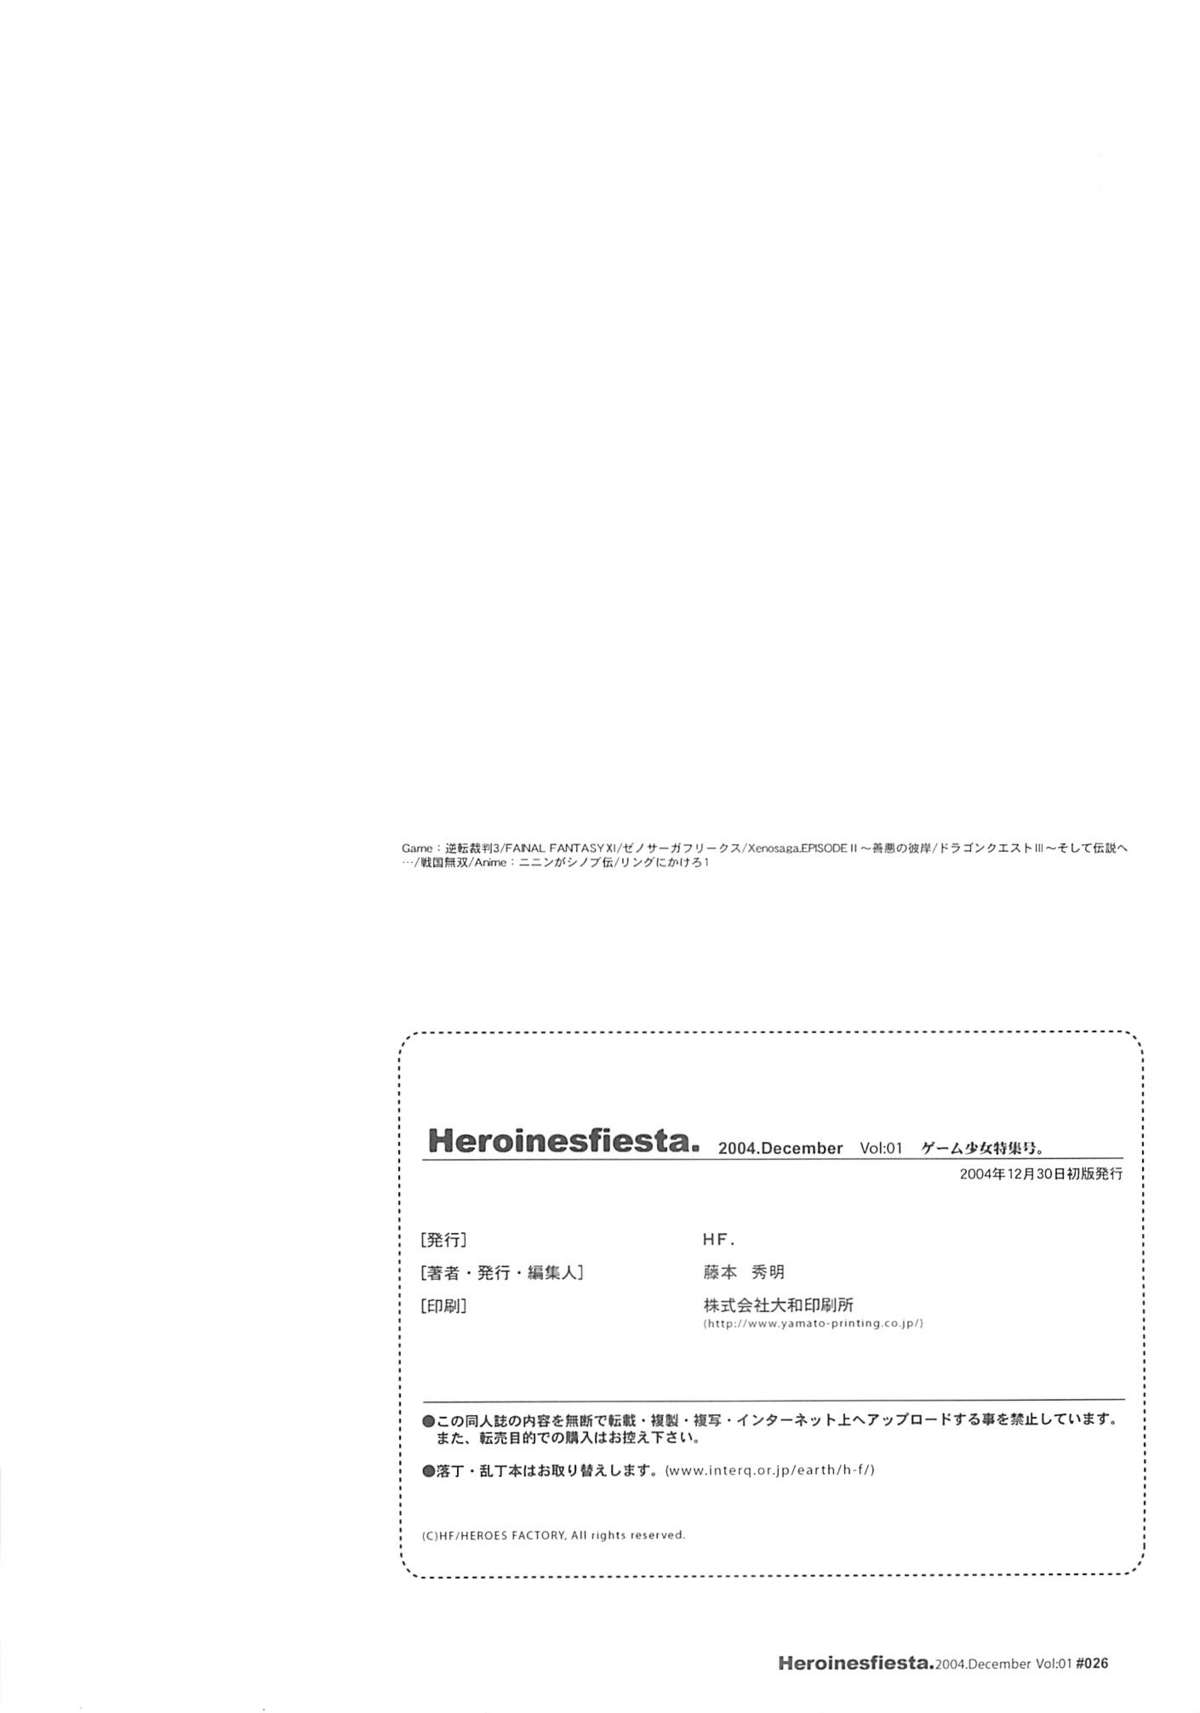 (C67) [HF. (藤本秀明)] Heroinesfiesta. (よろず)